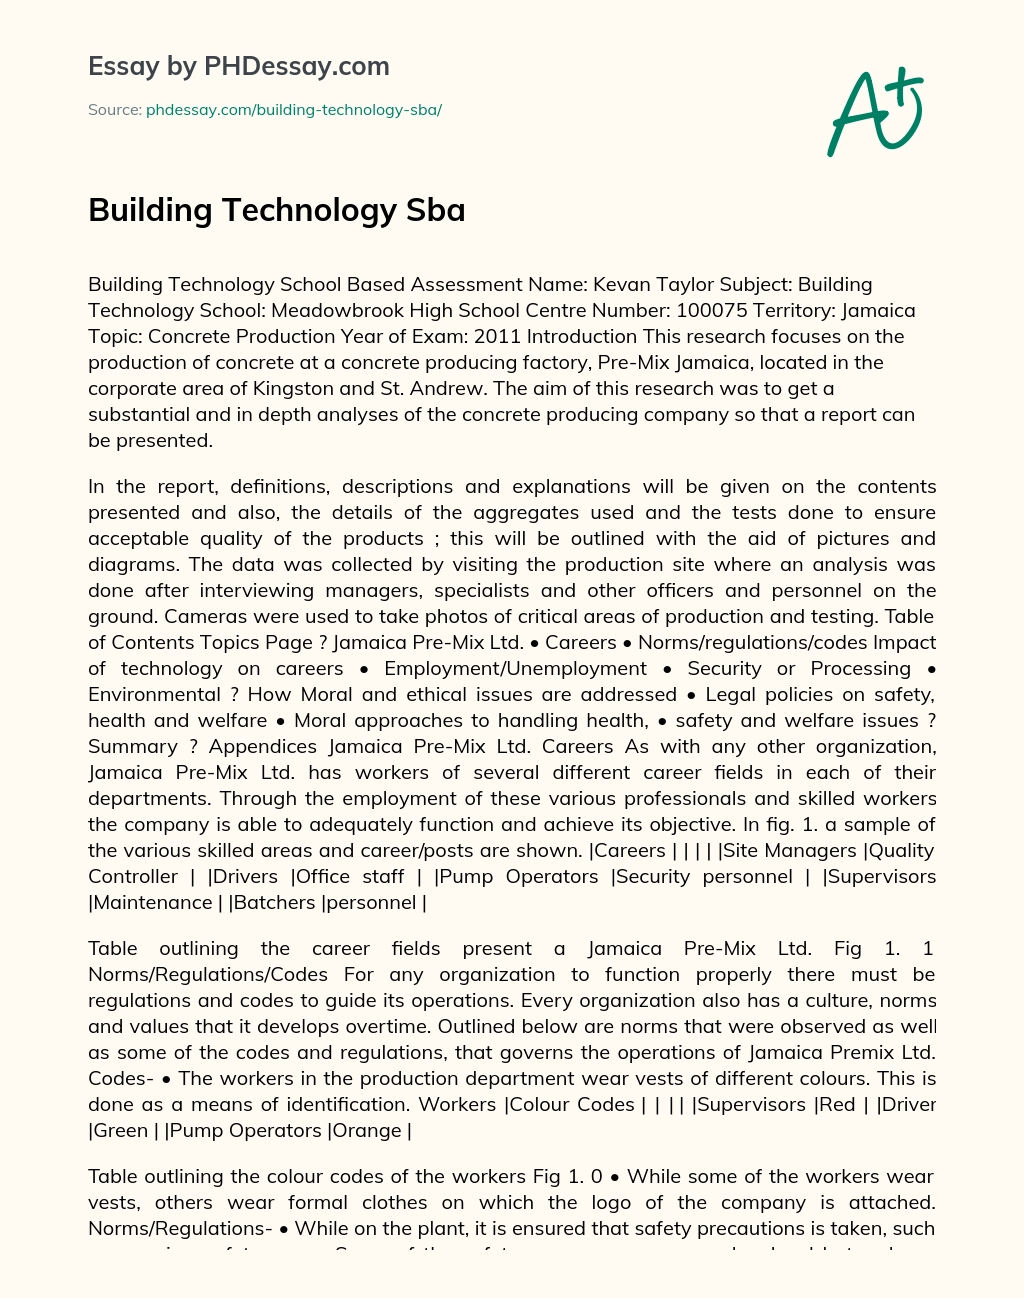 Building Technology Sba essay